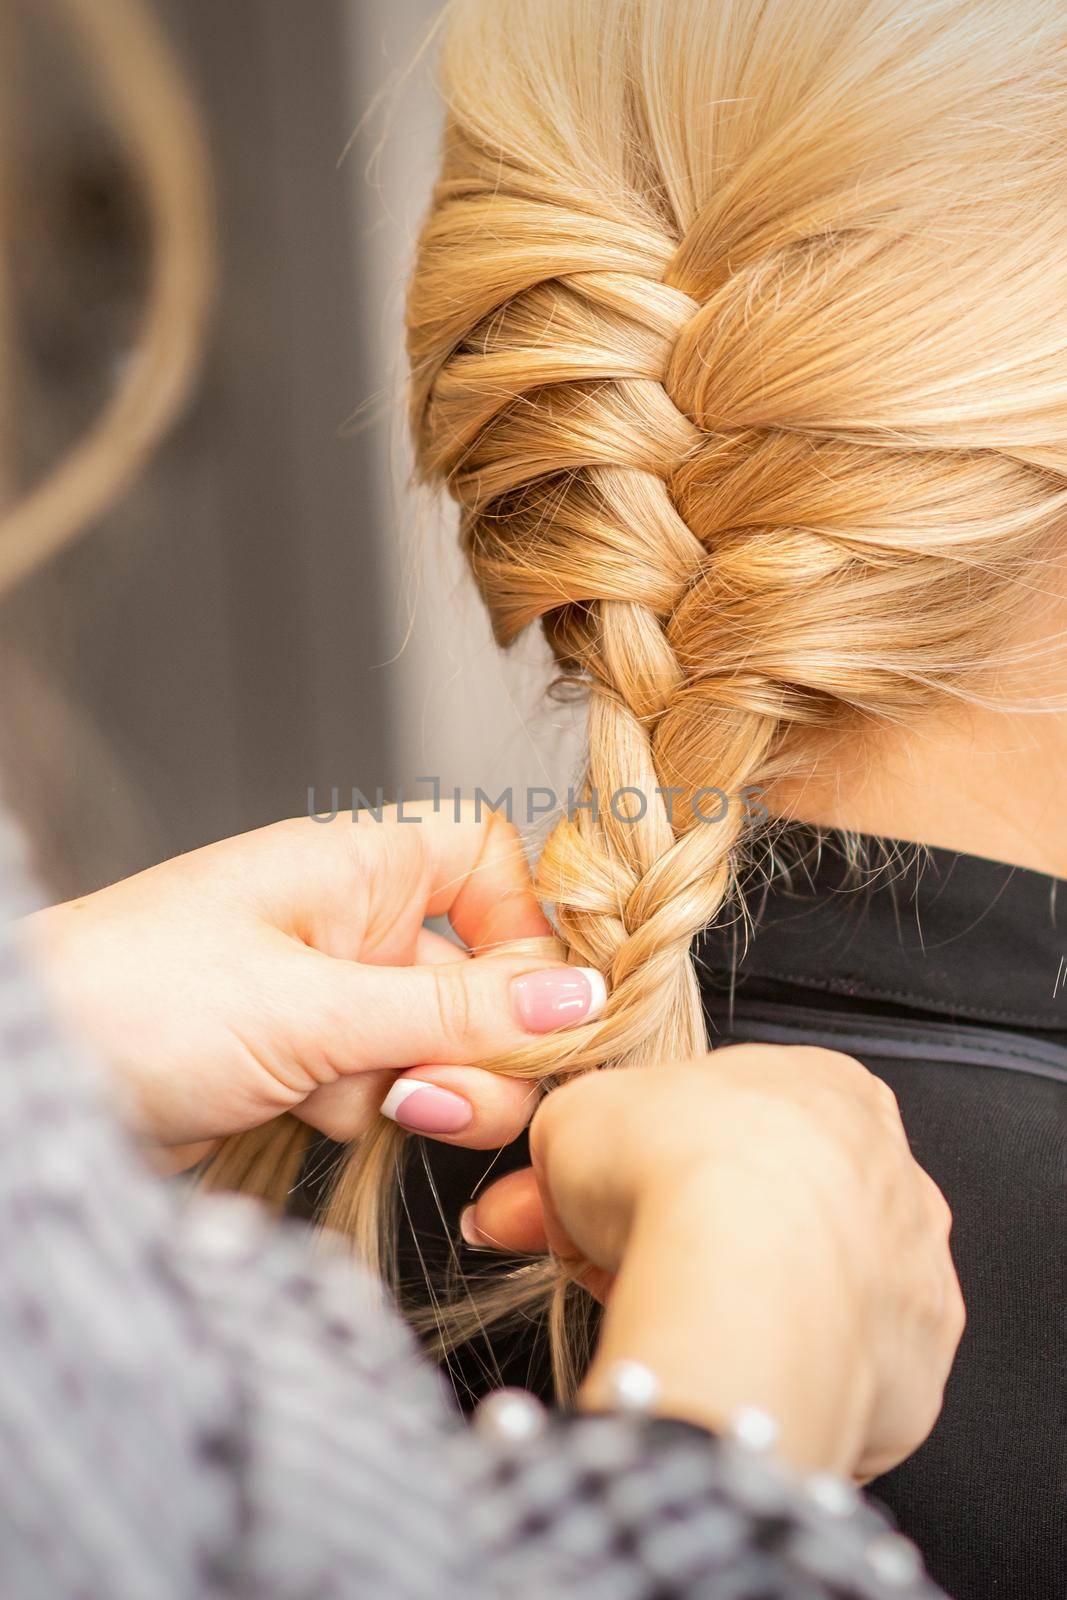 Braiding braid. Hands of female hairdresser braids long braid for a blonde woman in a hair salon. by okskukuruza